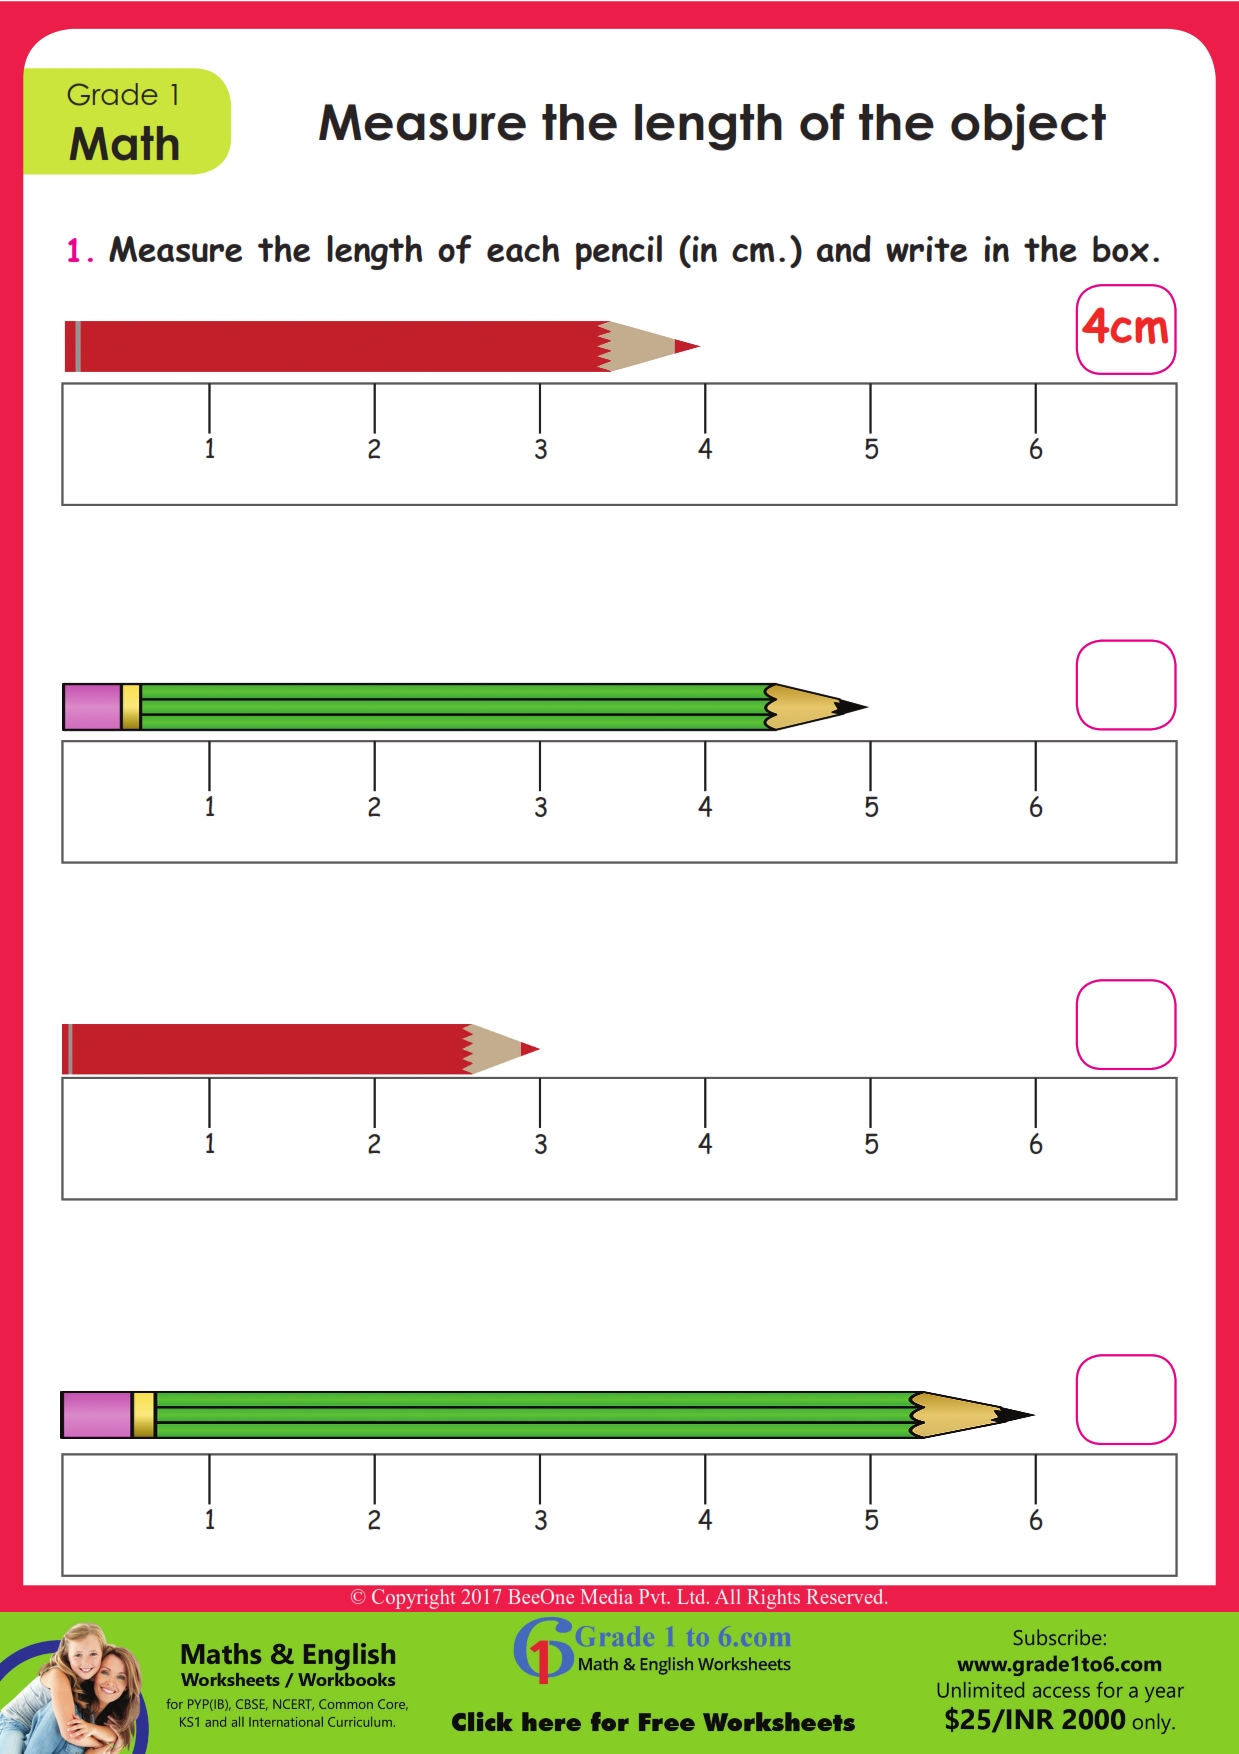 grade-1-math-measurement-worksheet-grade1to6